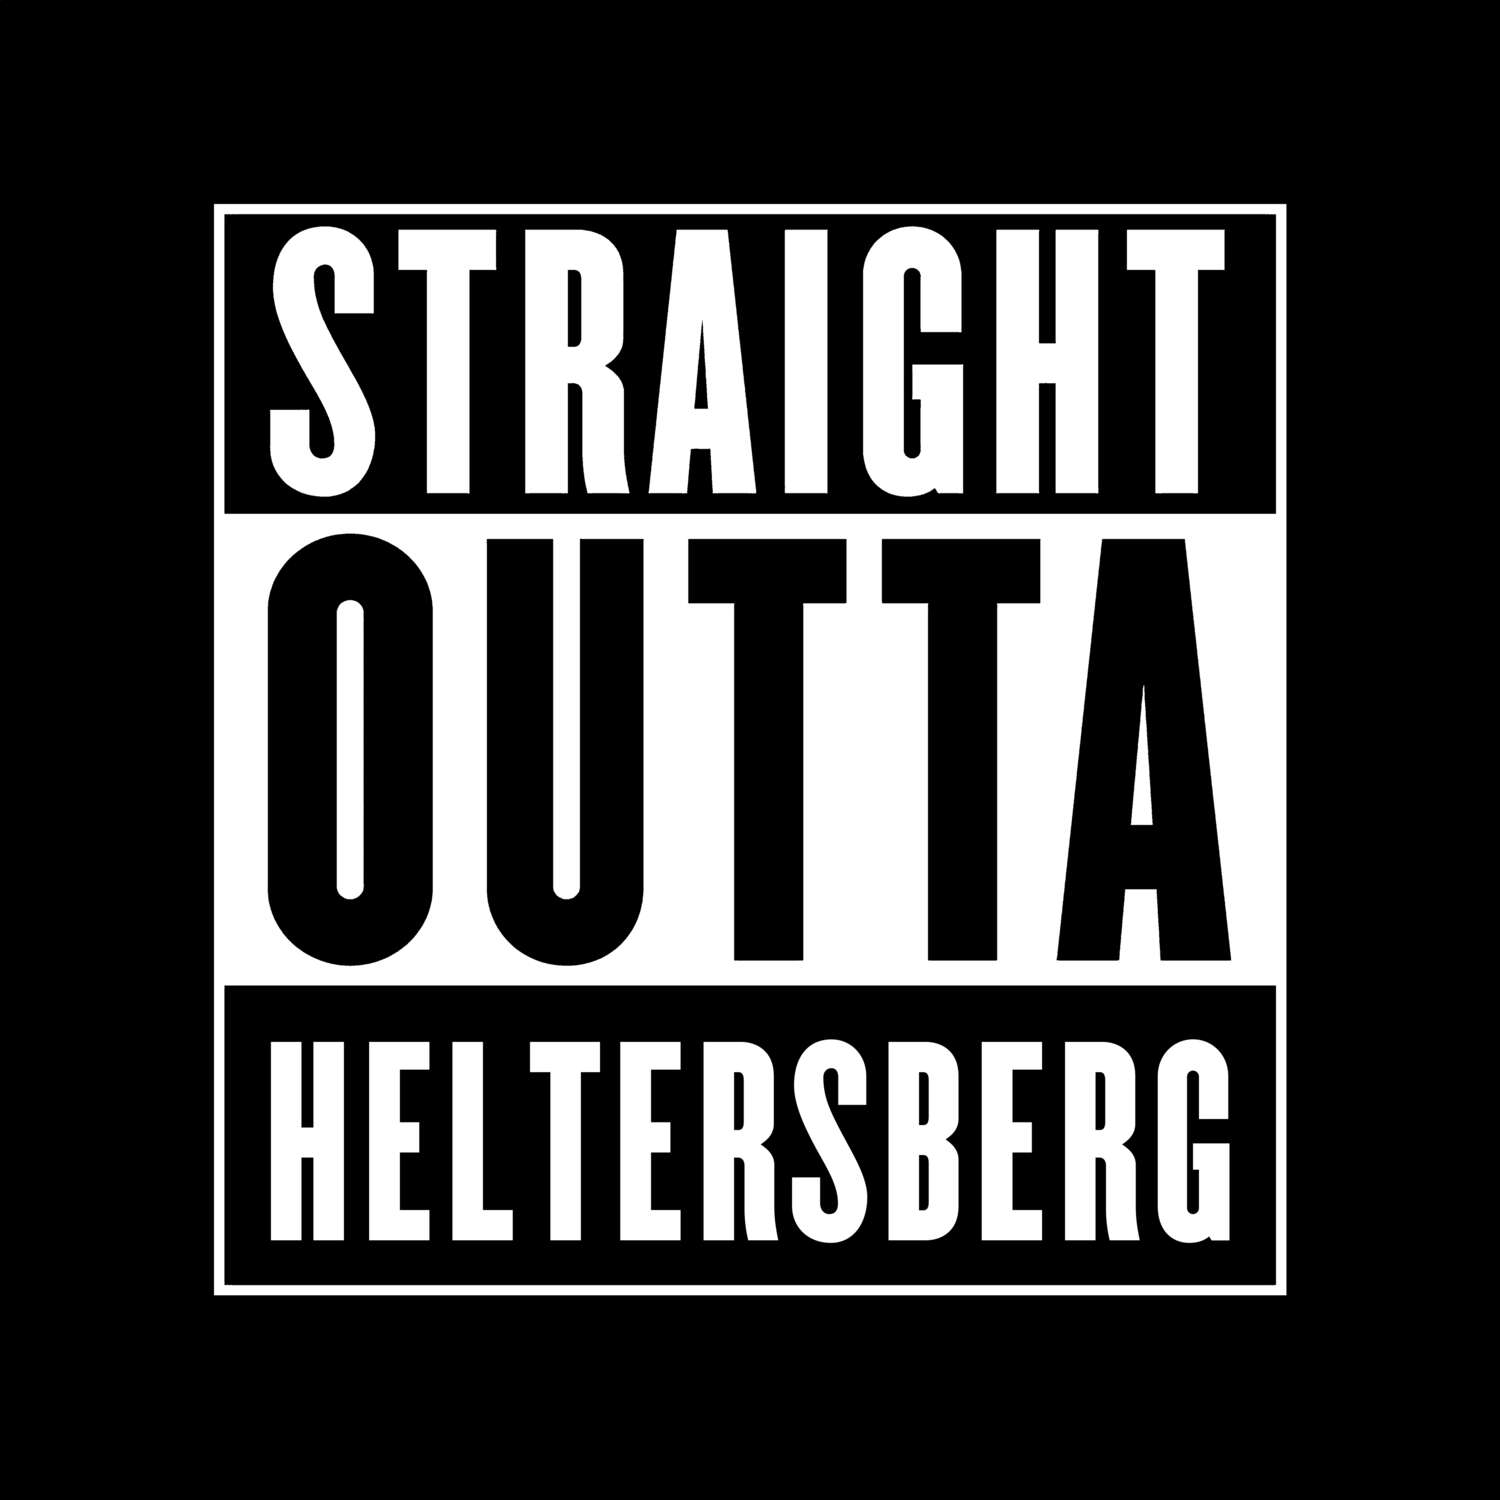 Heltersberg T-Shirt »Straight Outta«